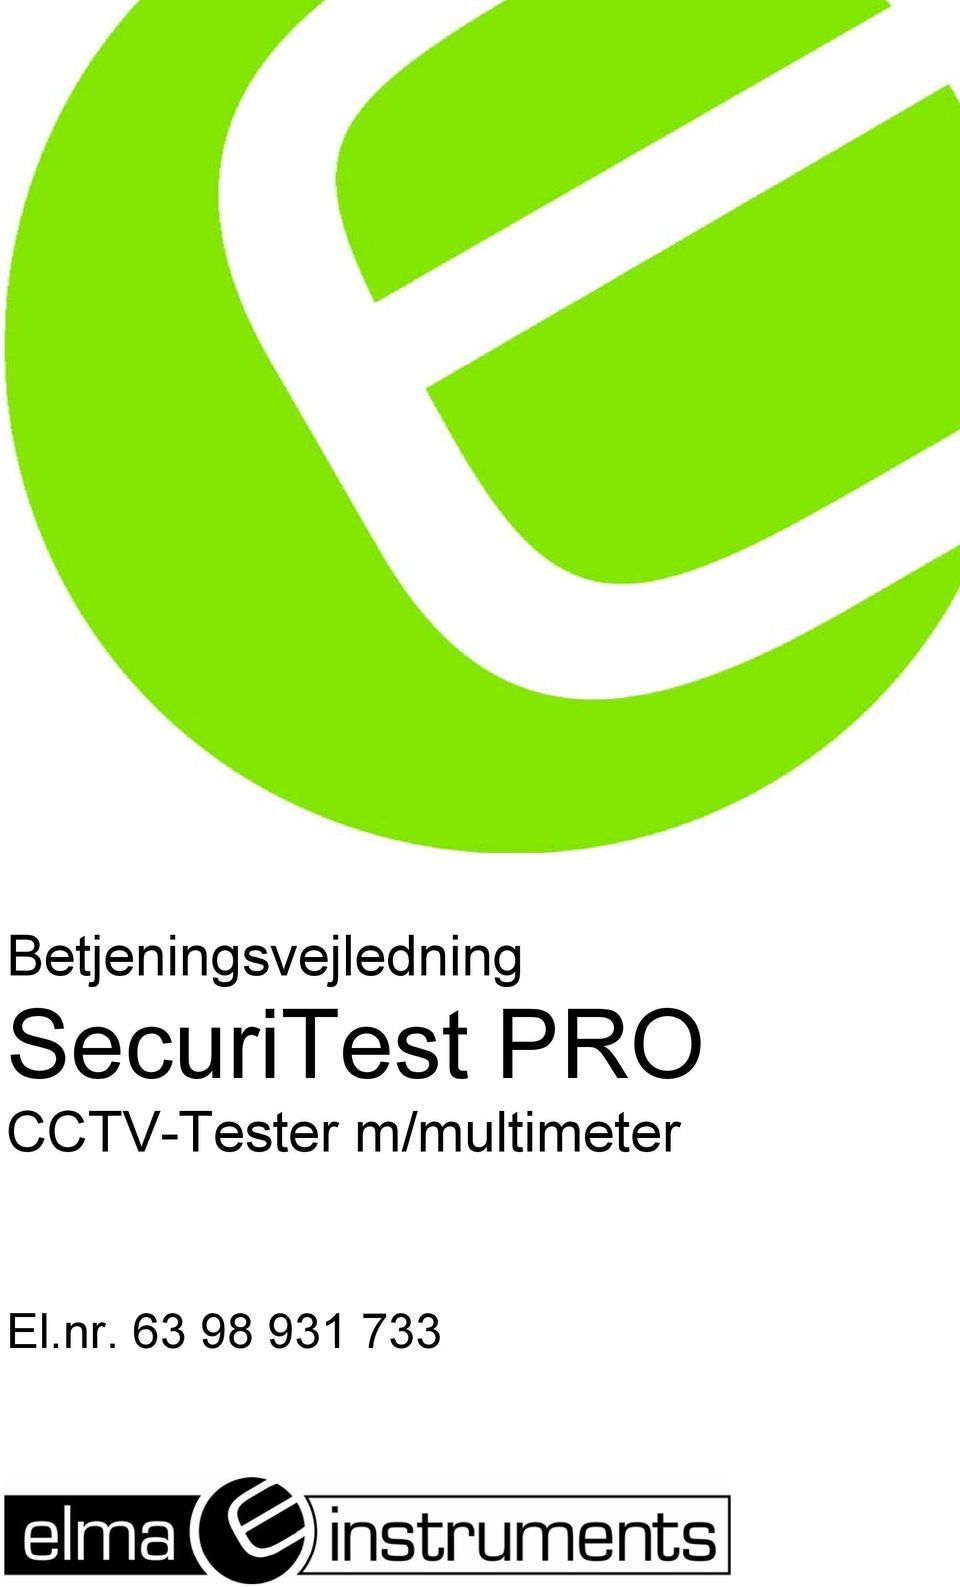 CCTV-Tester